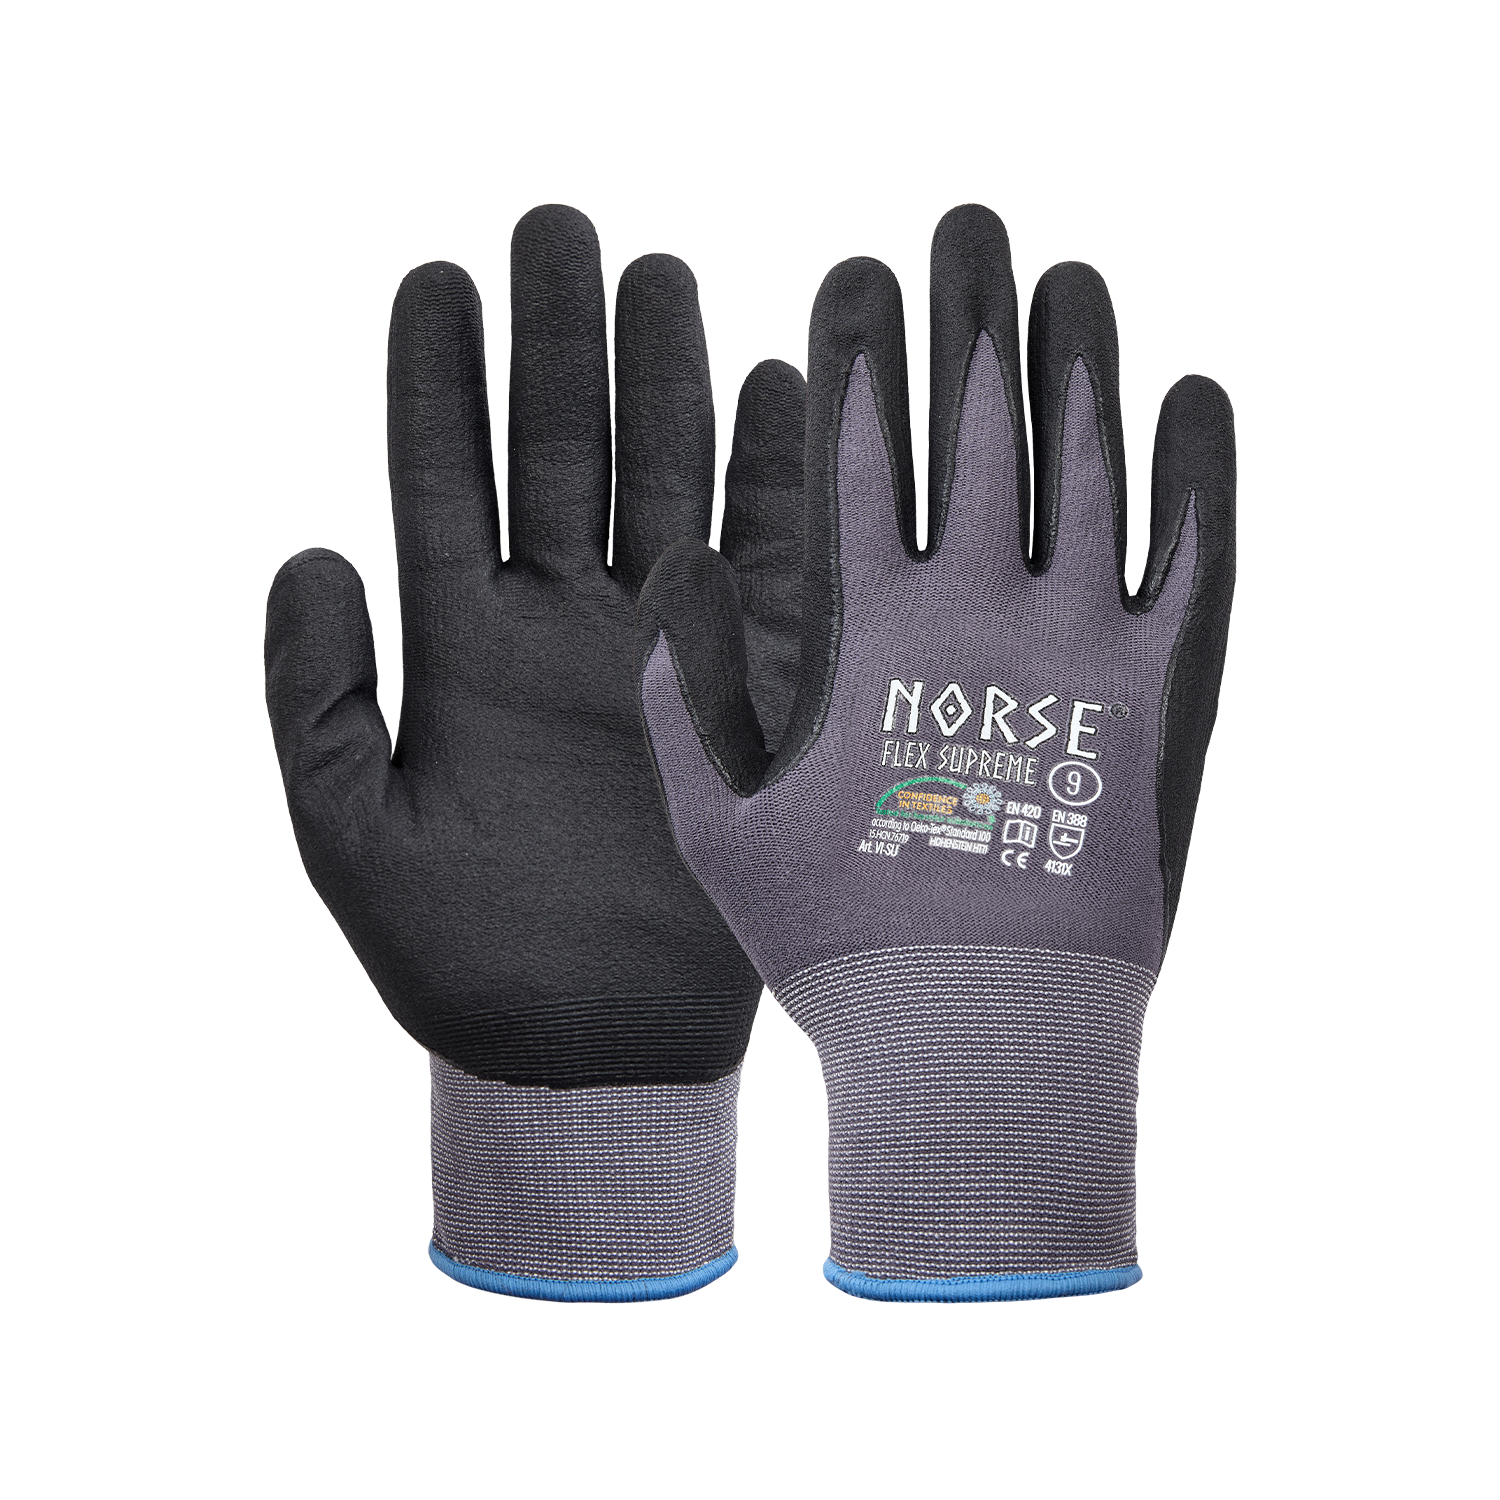 NORSE Flex Supreme assembly gloves size 8